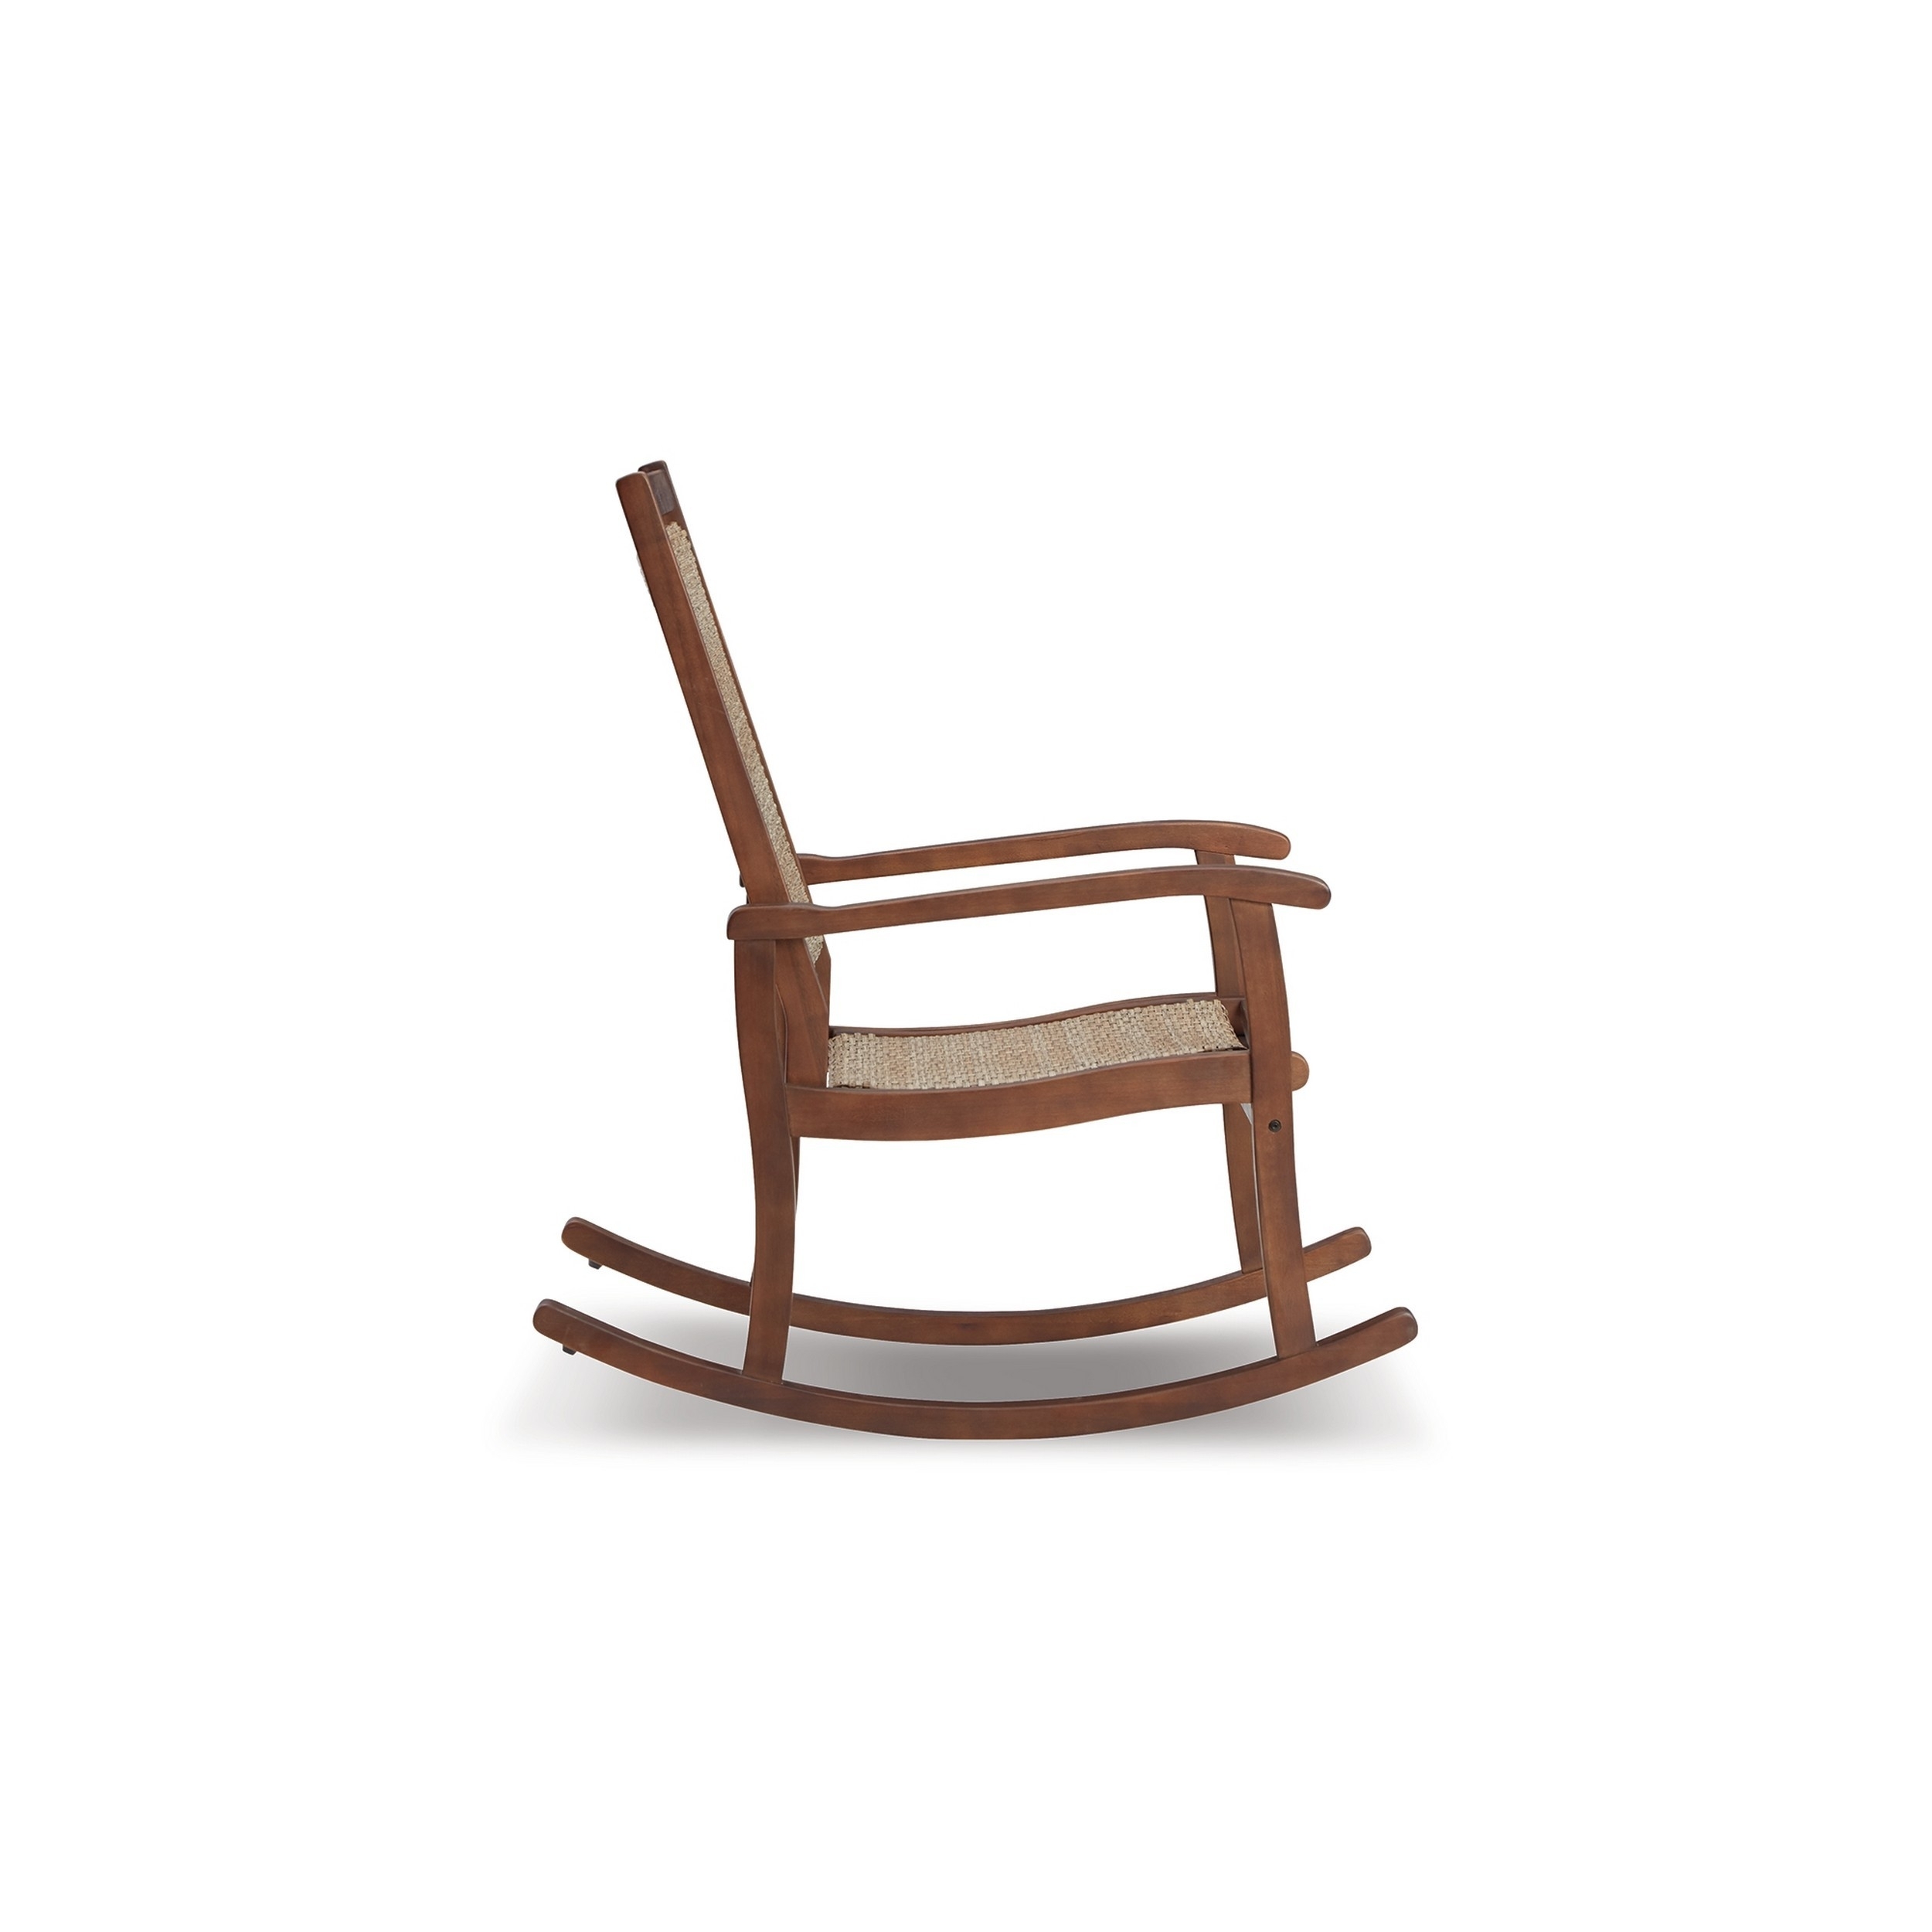 Emin 38 Inch Rocking Chair, Outdoor Resin Wicker Seat, Brown Wood Frame - Saltoro Sherpi